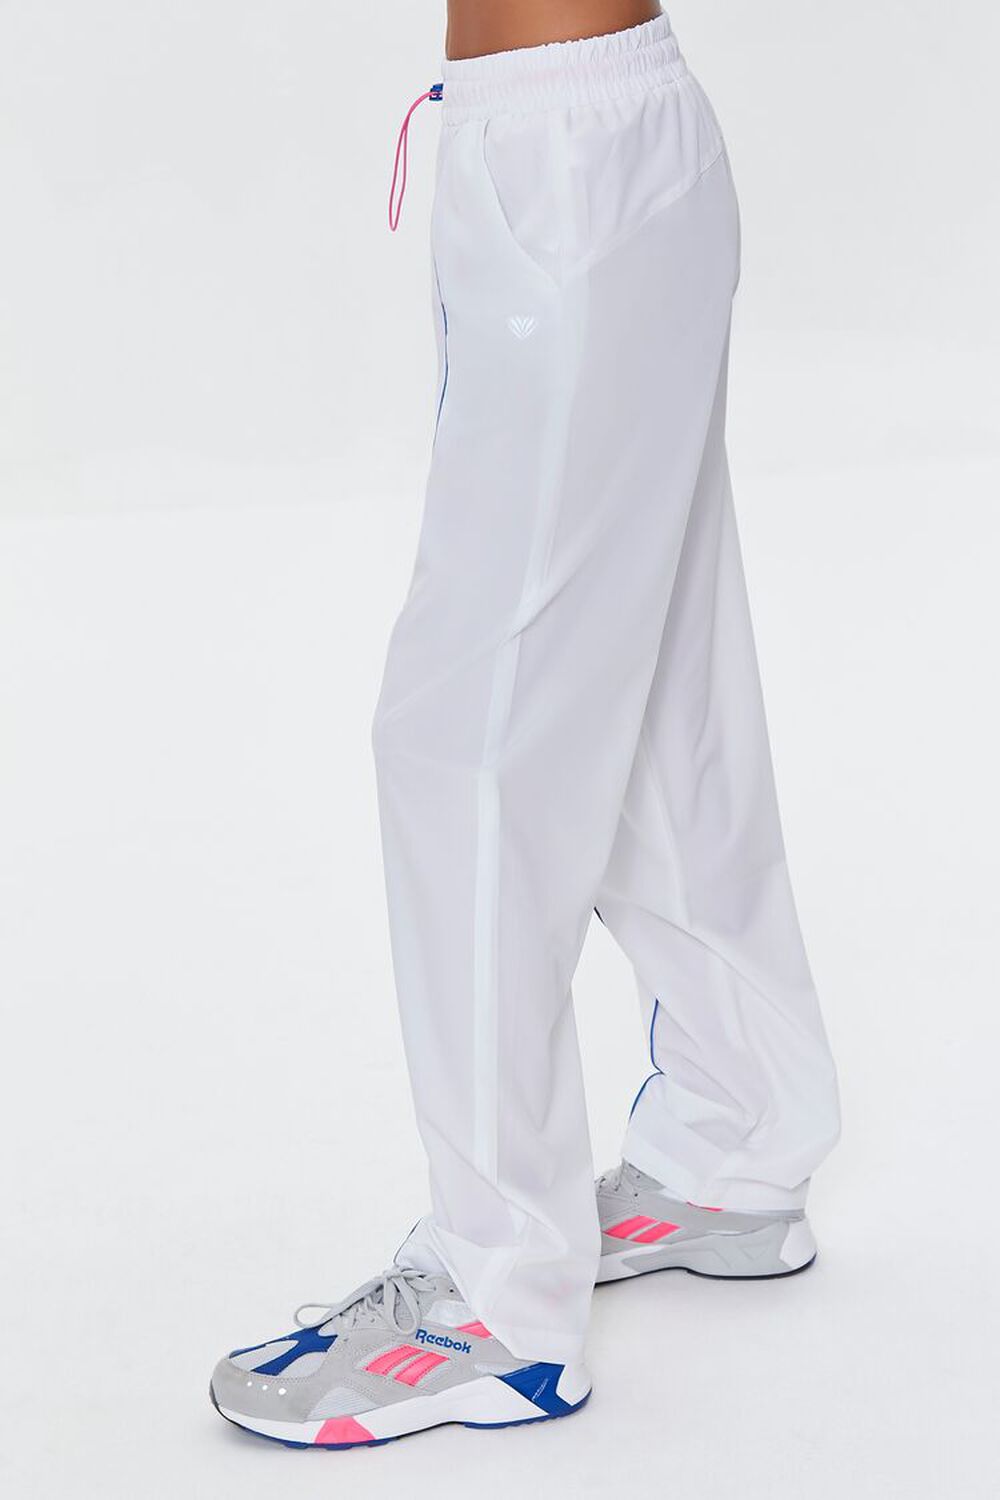 WHITE Active Toggle Drawstring Pants, image 3